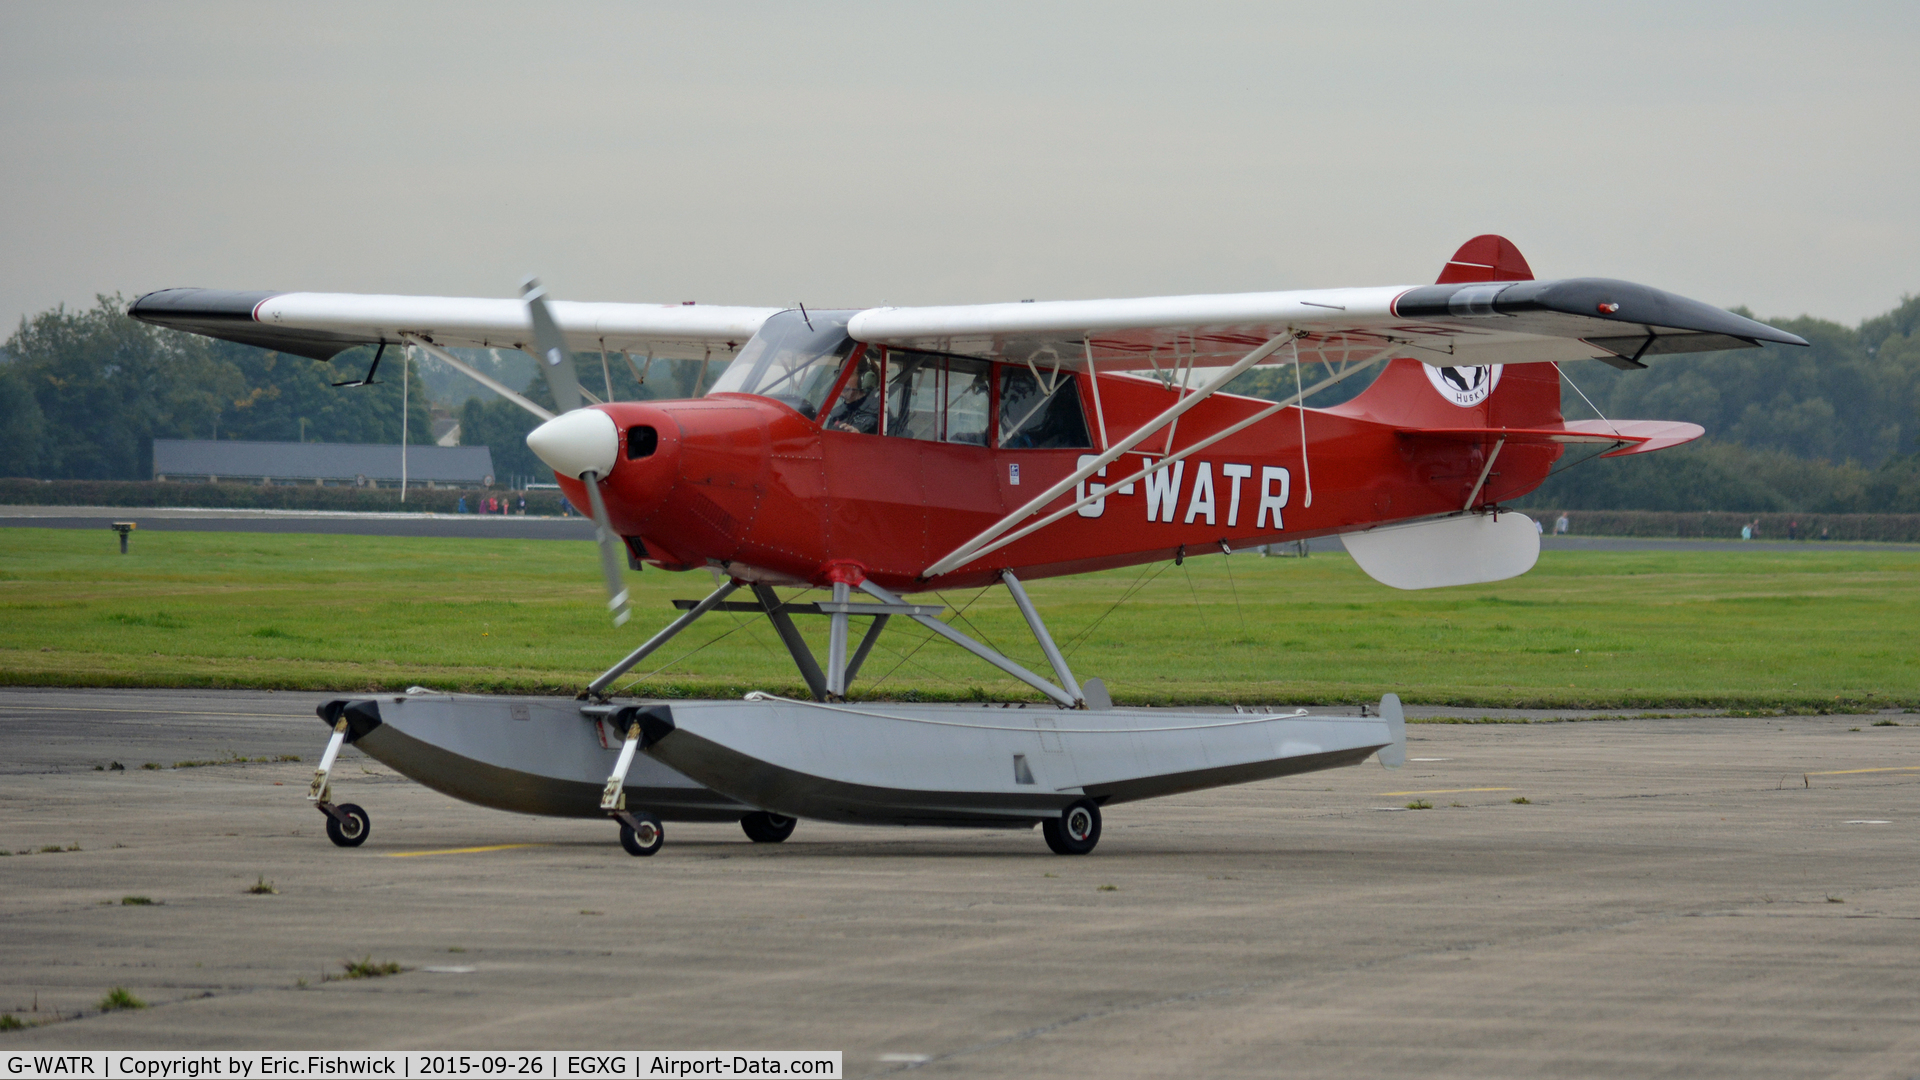 G-WATR, 1988 Christen A-1 Husky C/N 1040, 3. G-WATR arriving at The Yorkshire Air Show, Church Fenton, Sept. 2015.